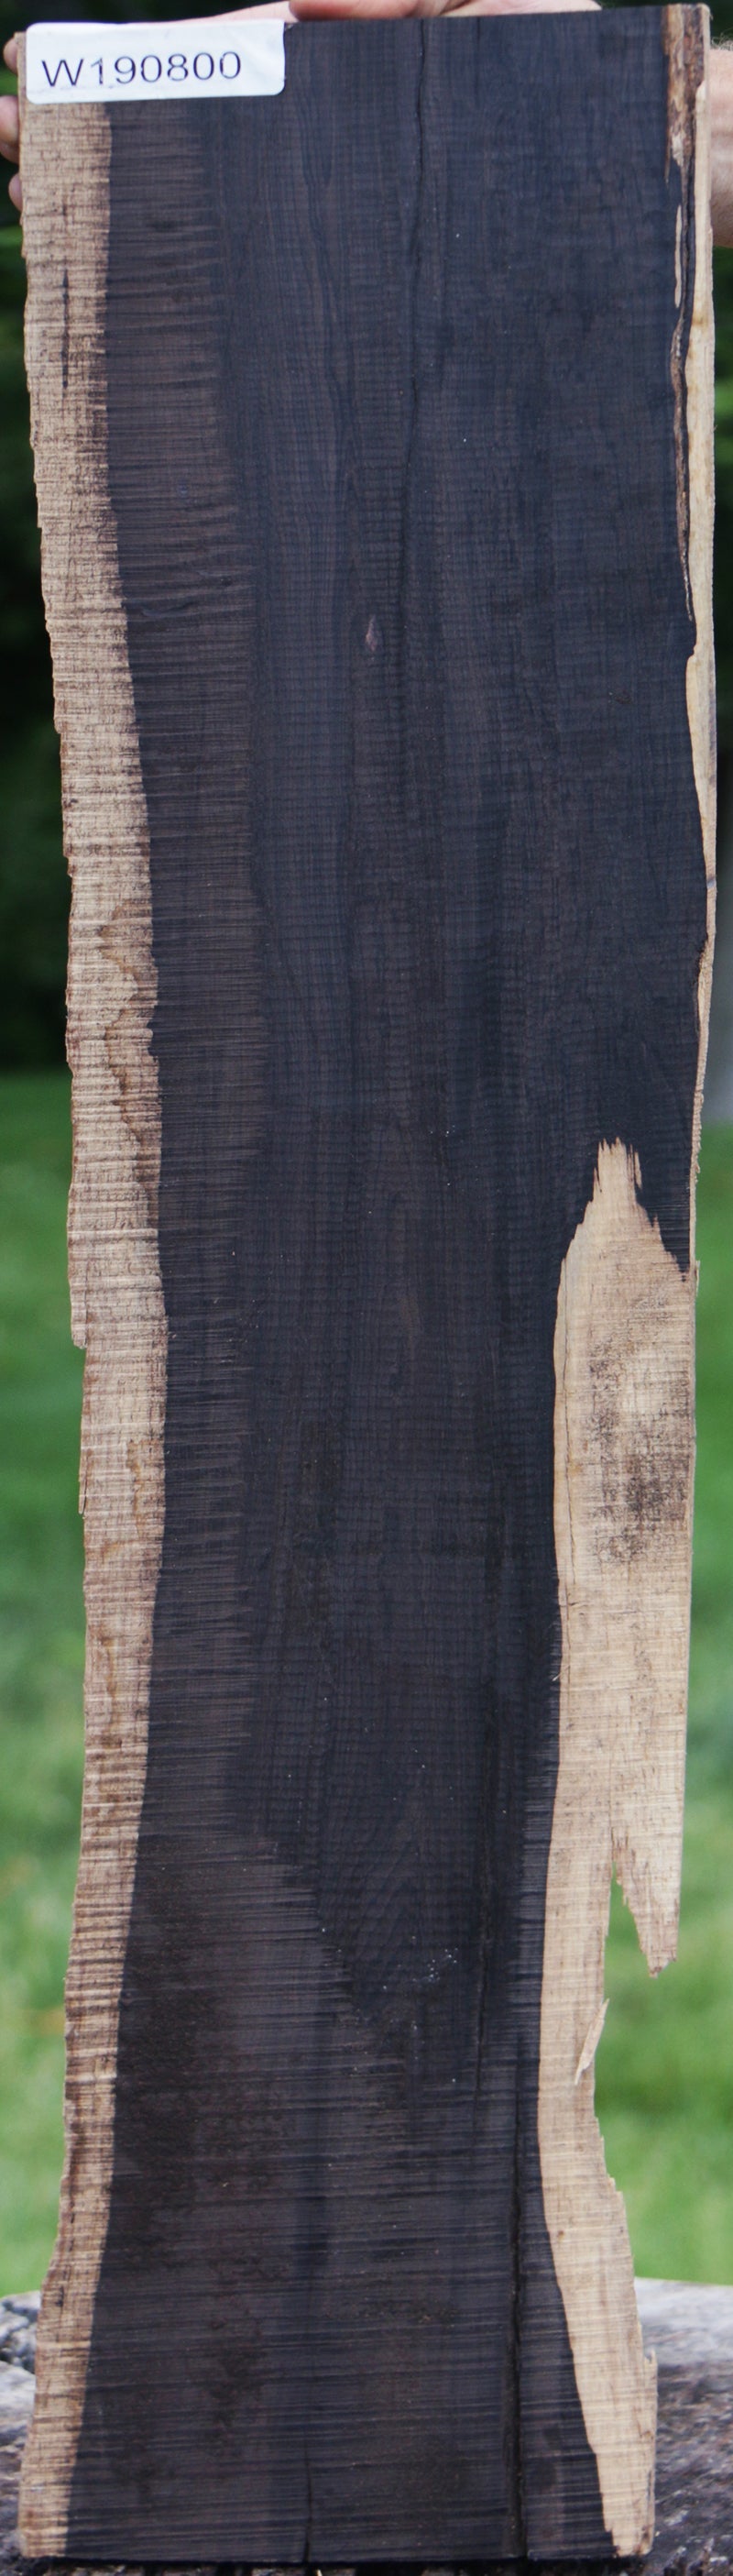 African Blackwood  Wood lumber, Wood tree, Wood